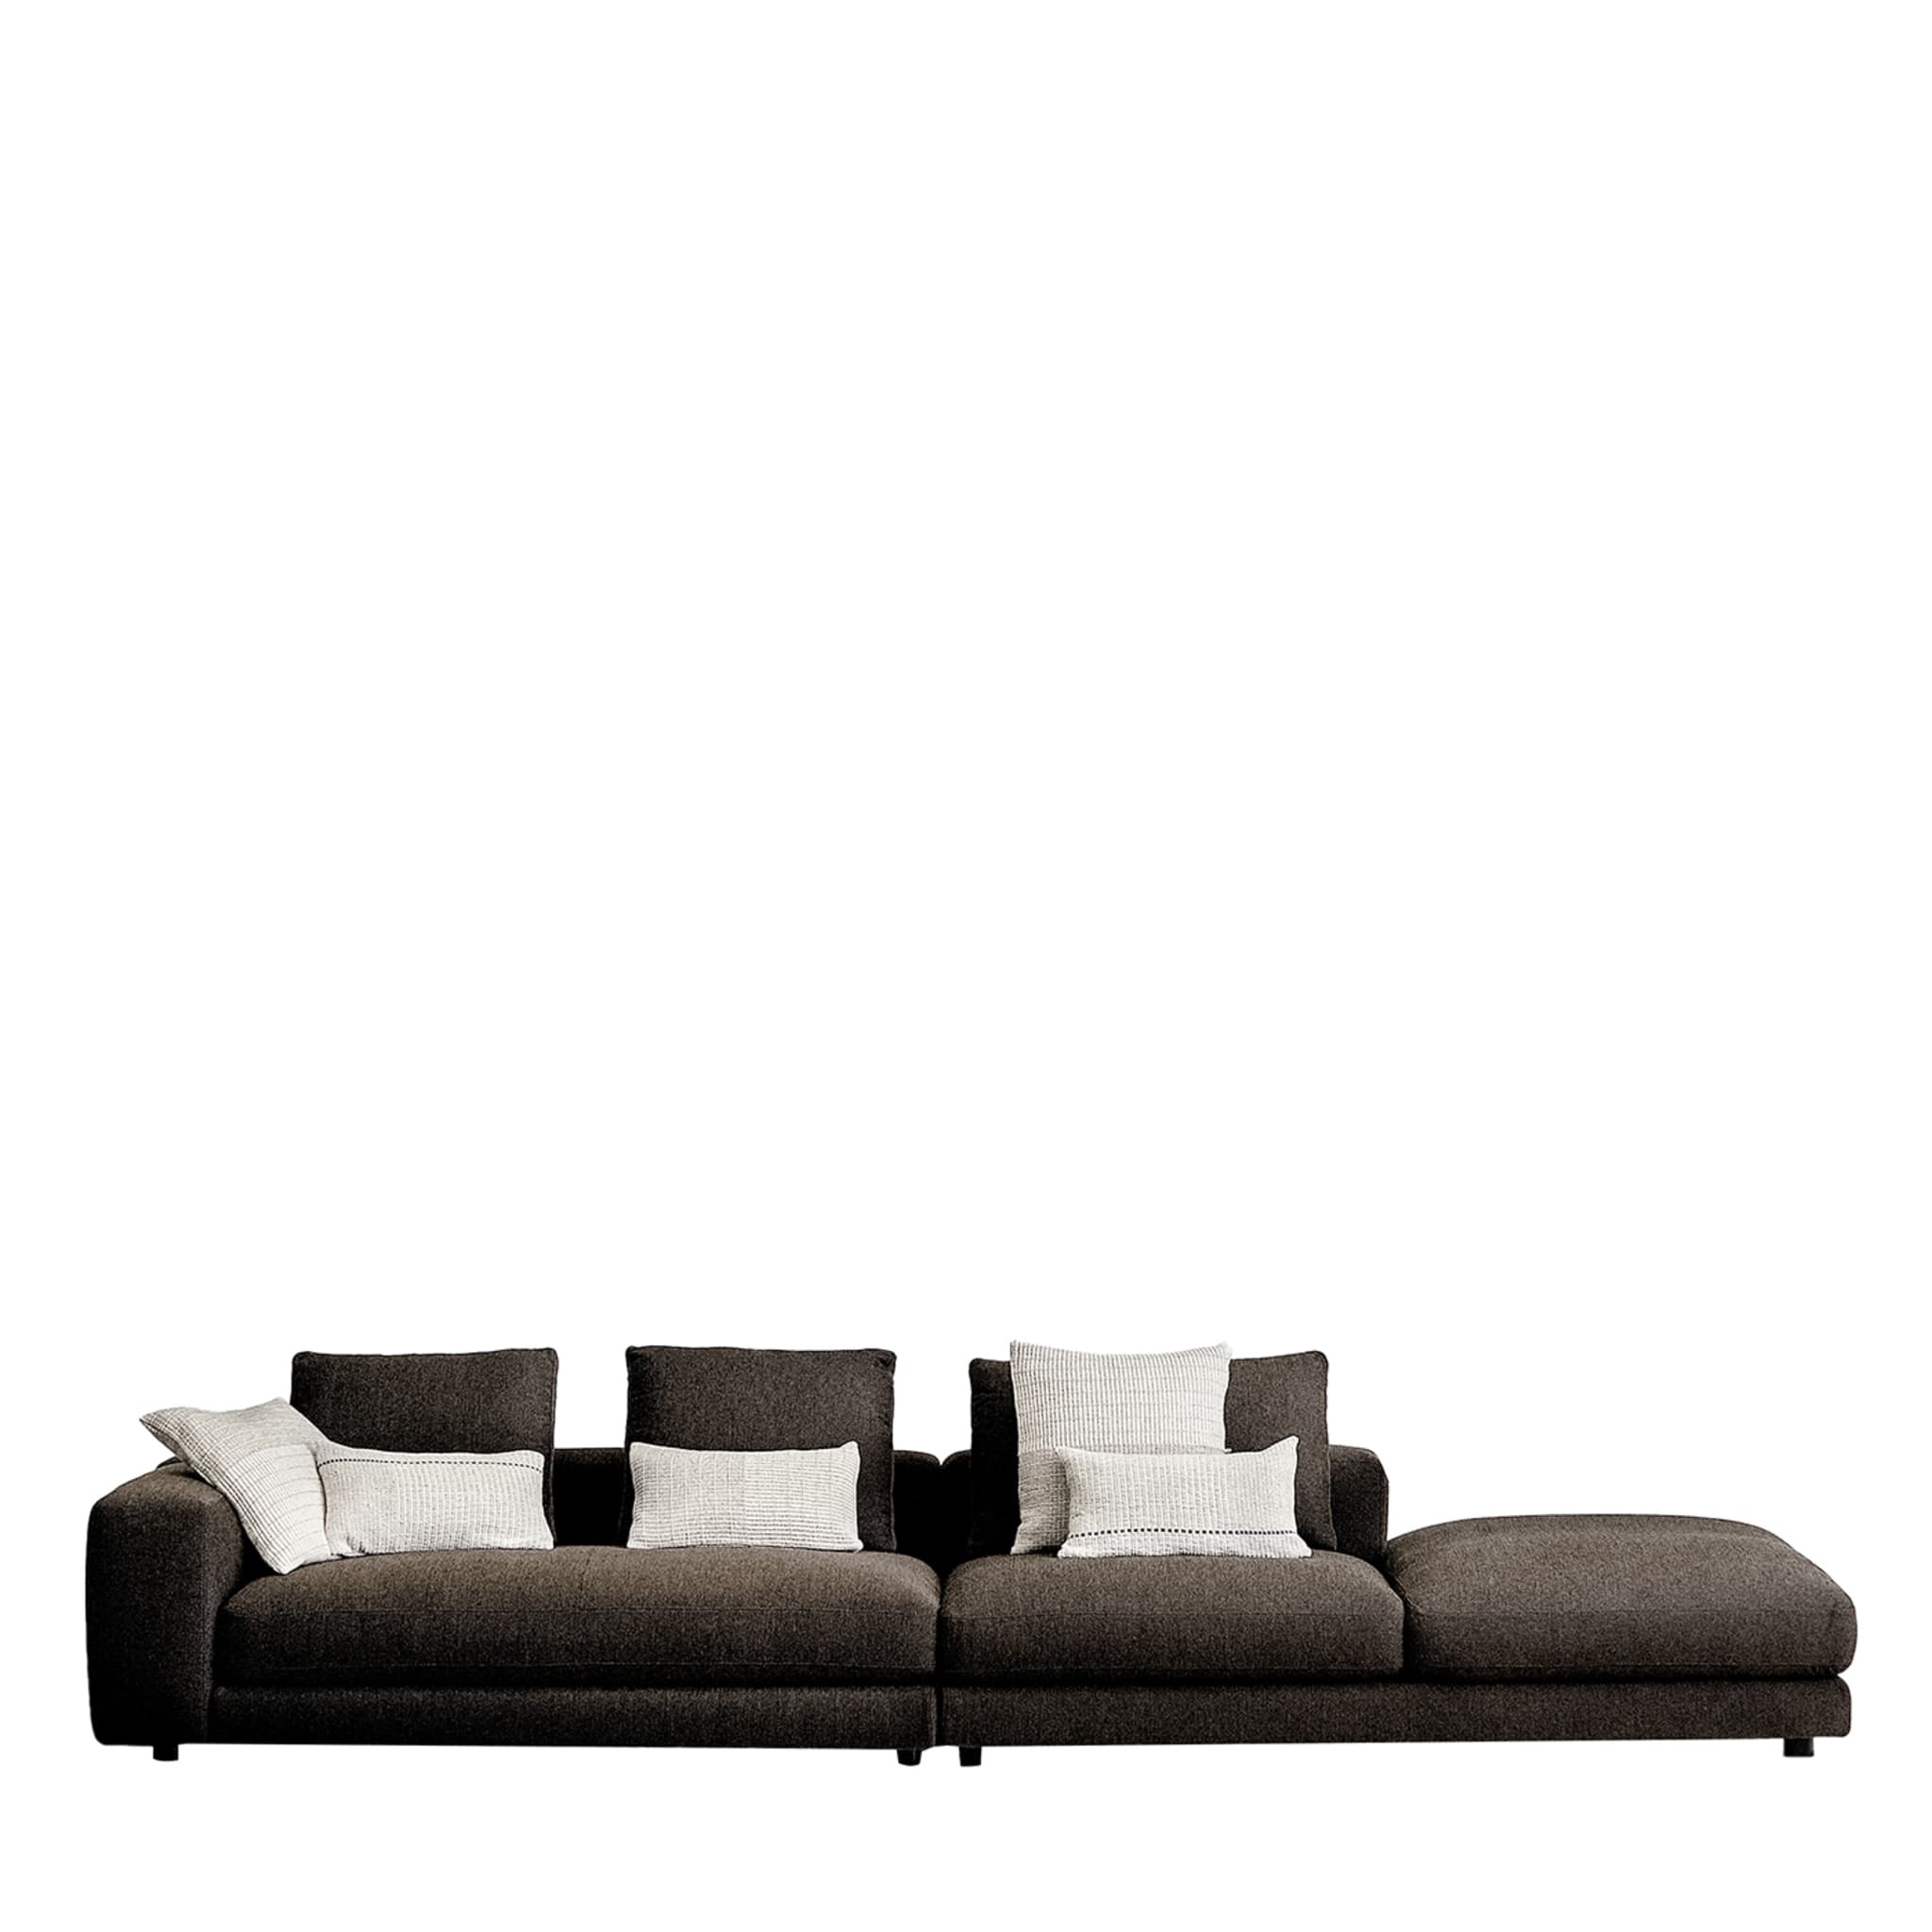 Rio 3-sitzer modulares braunes sofa von Ludovica + Roberto Palomba - Hauptansicht